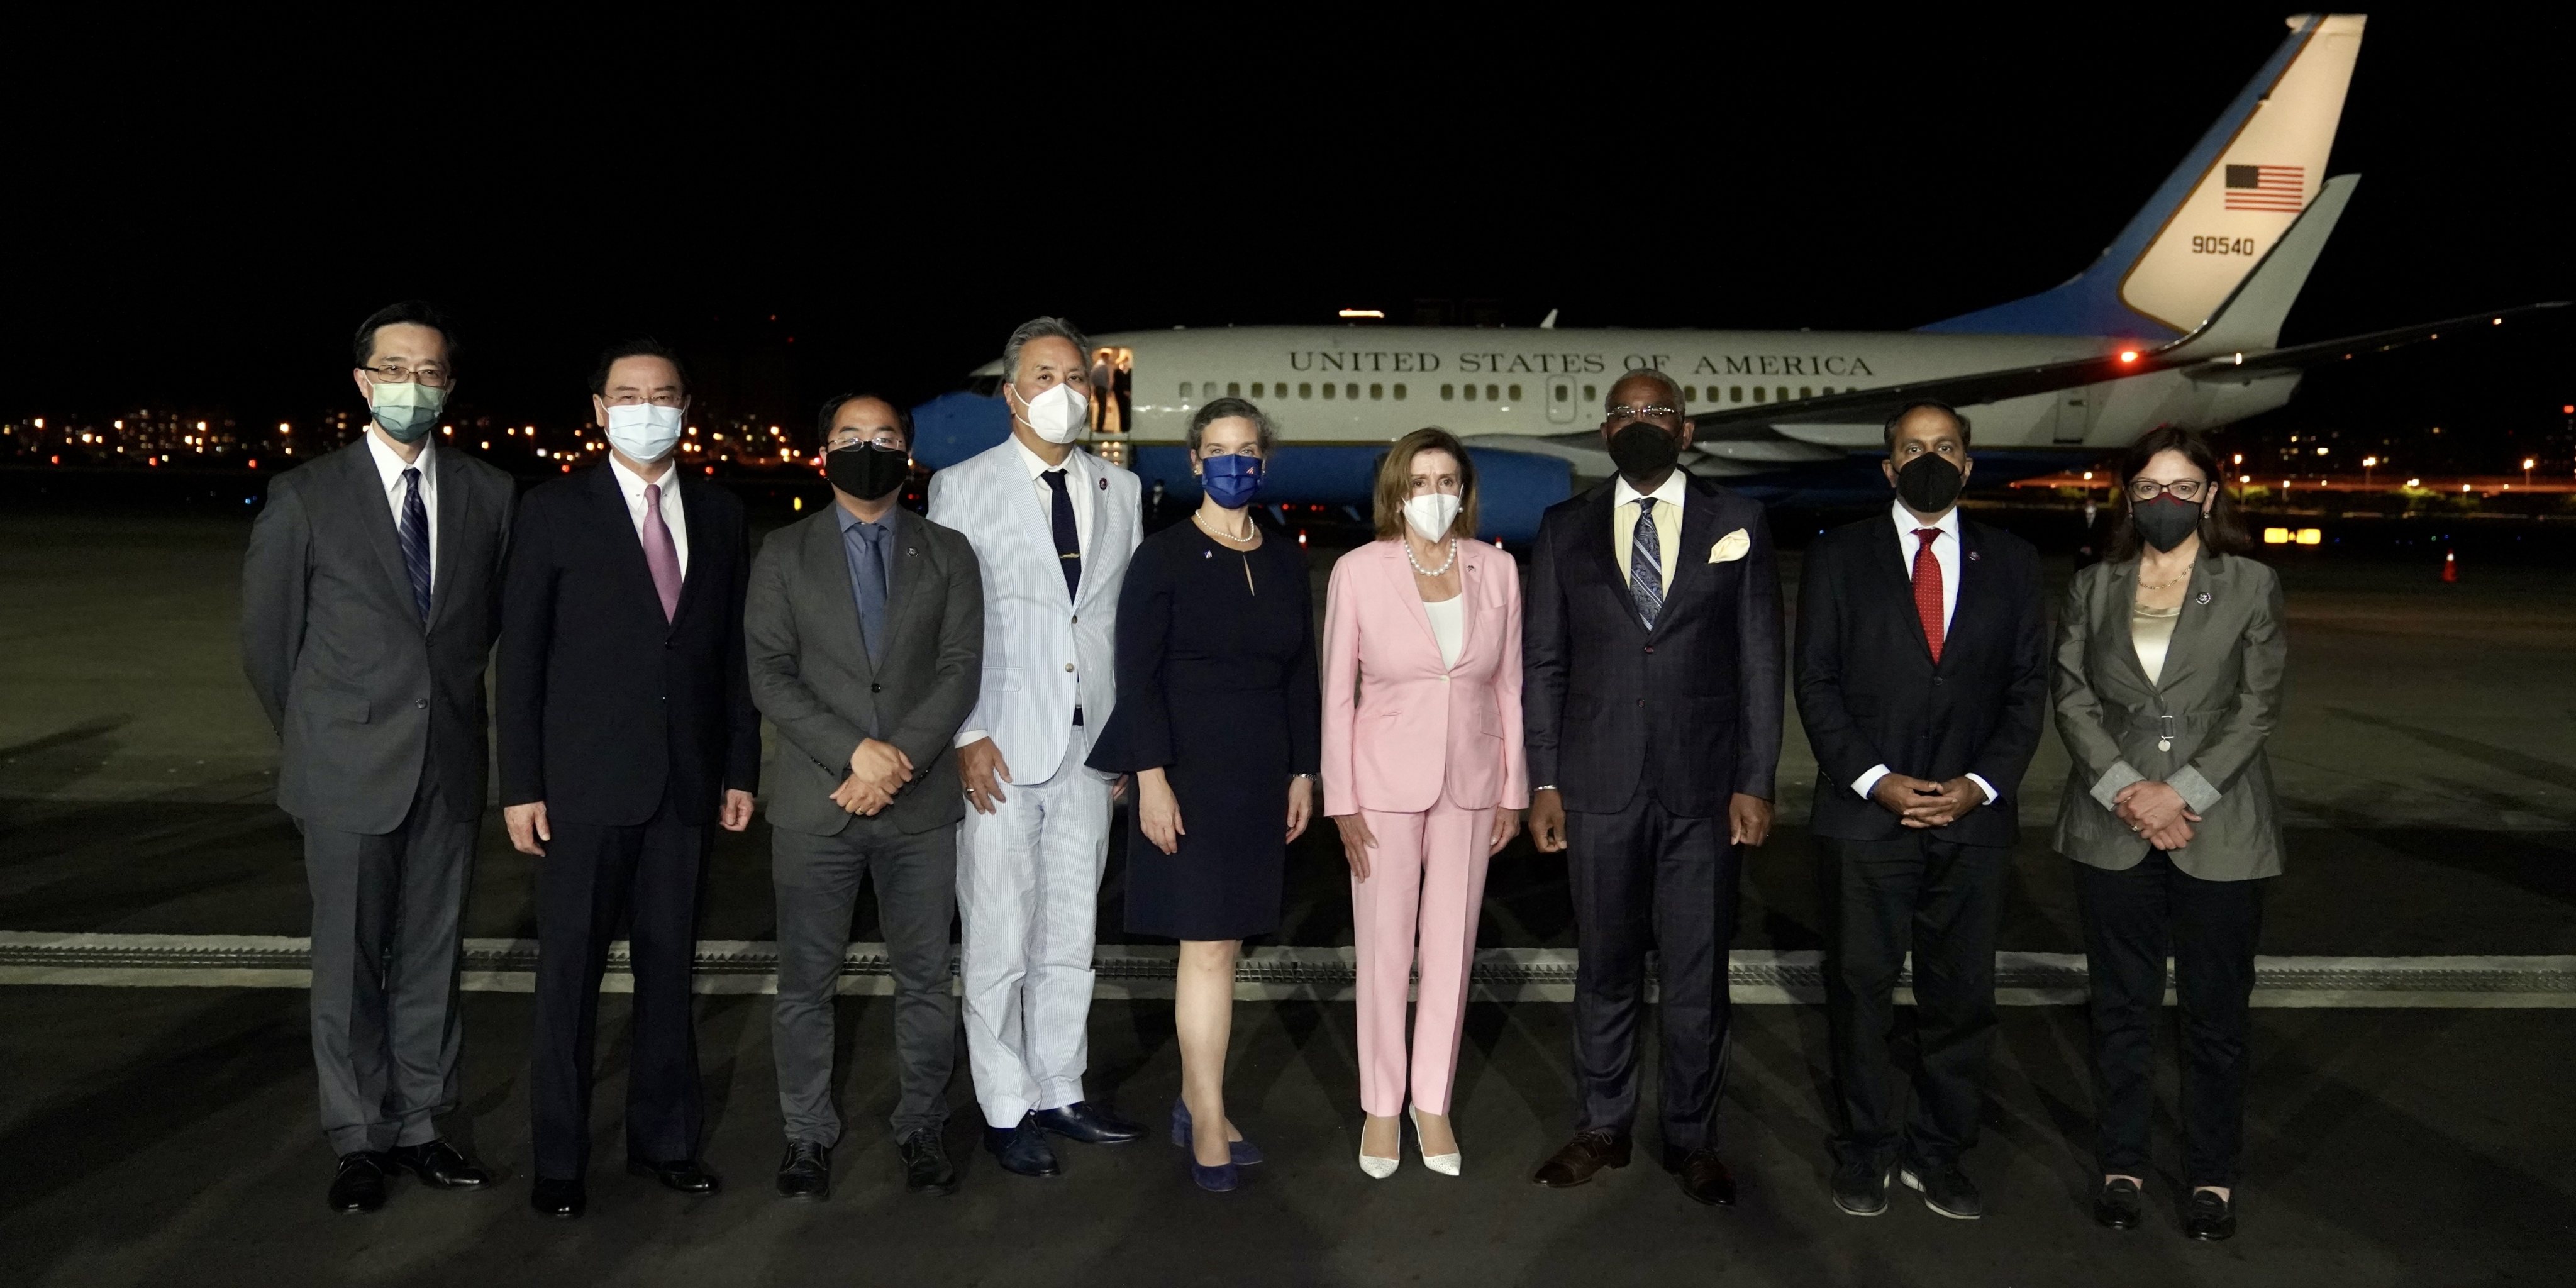 U.S. House Speaker Nancy Pelosi lands in Taiwan